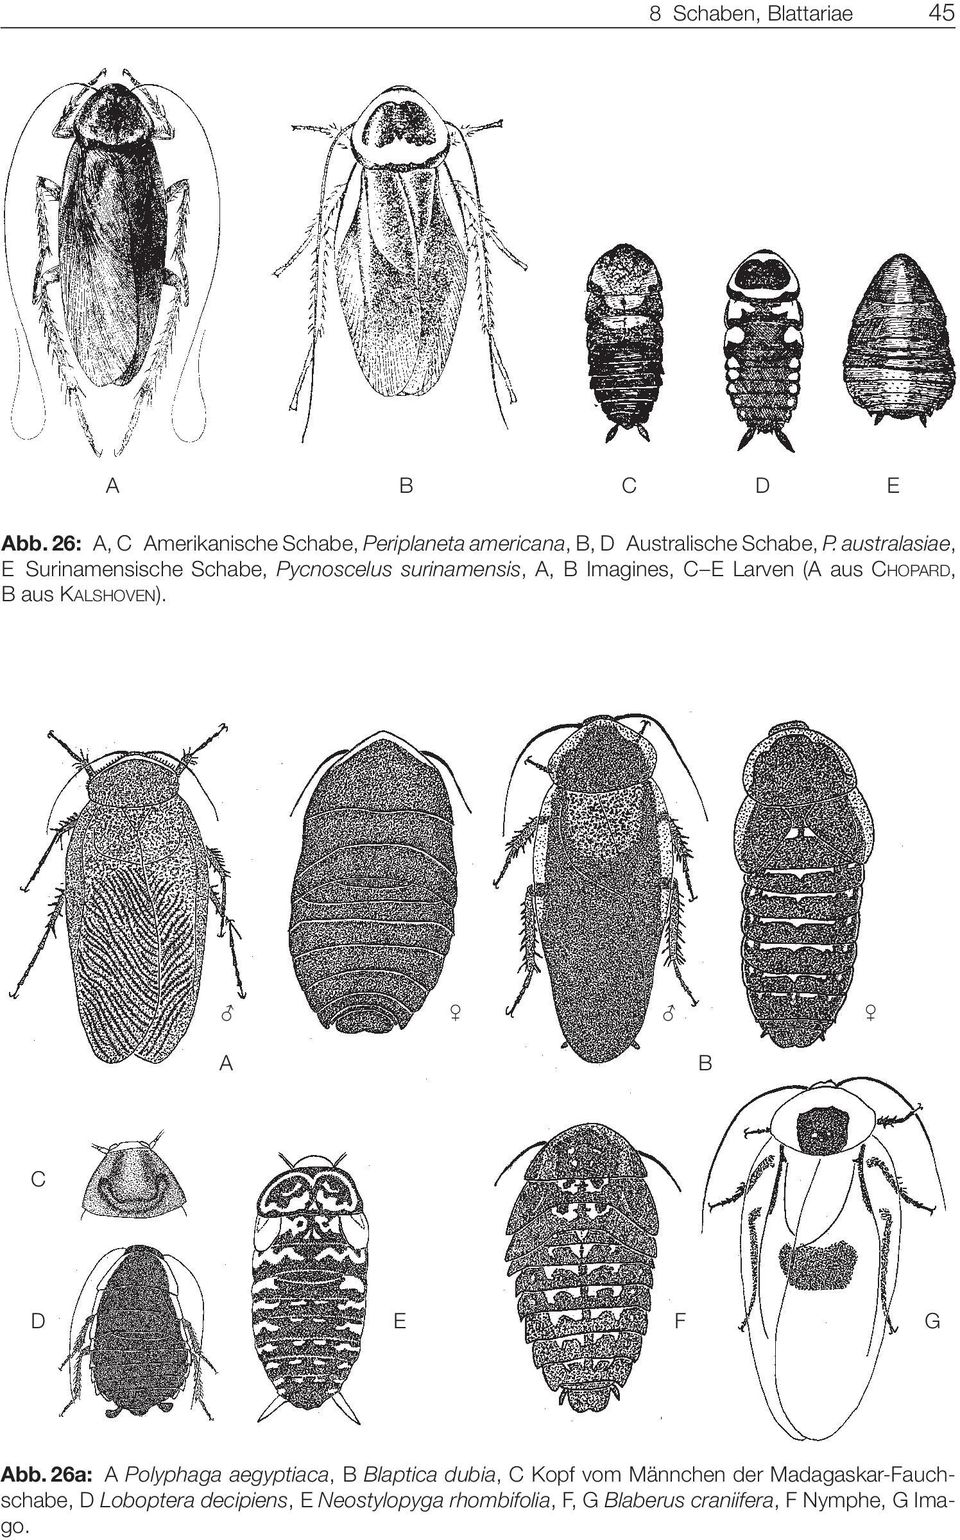 australasiae, E Surinamensische Schabe, Pycnoscelus surinamensis, A, B Imagines, C E Larven (A aus CHOPARD, B aus